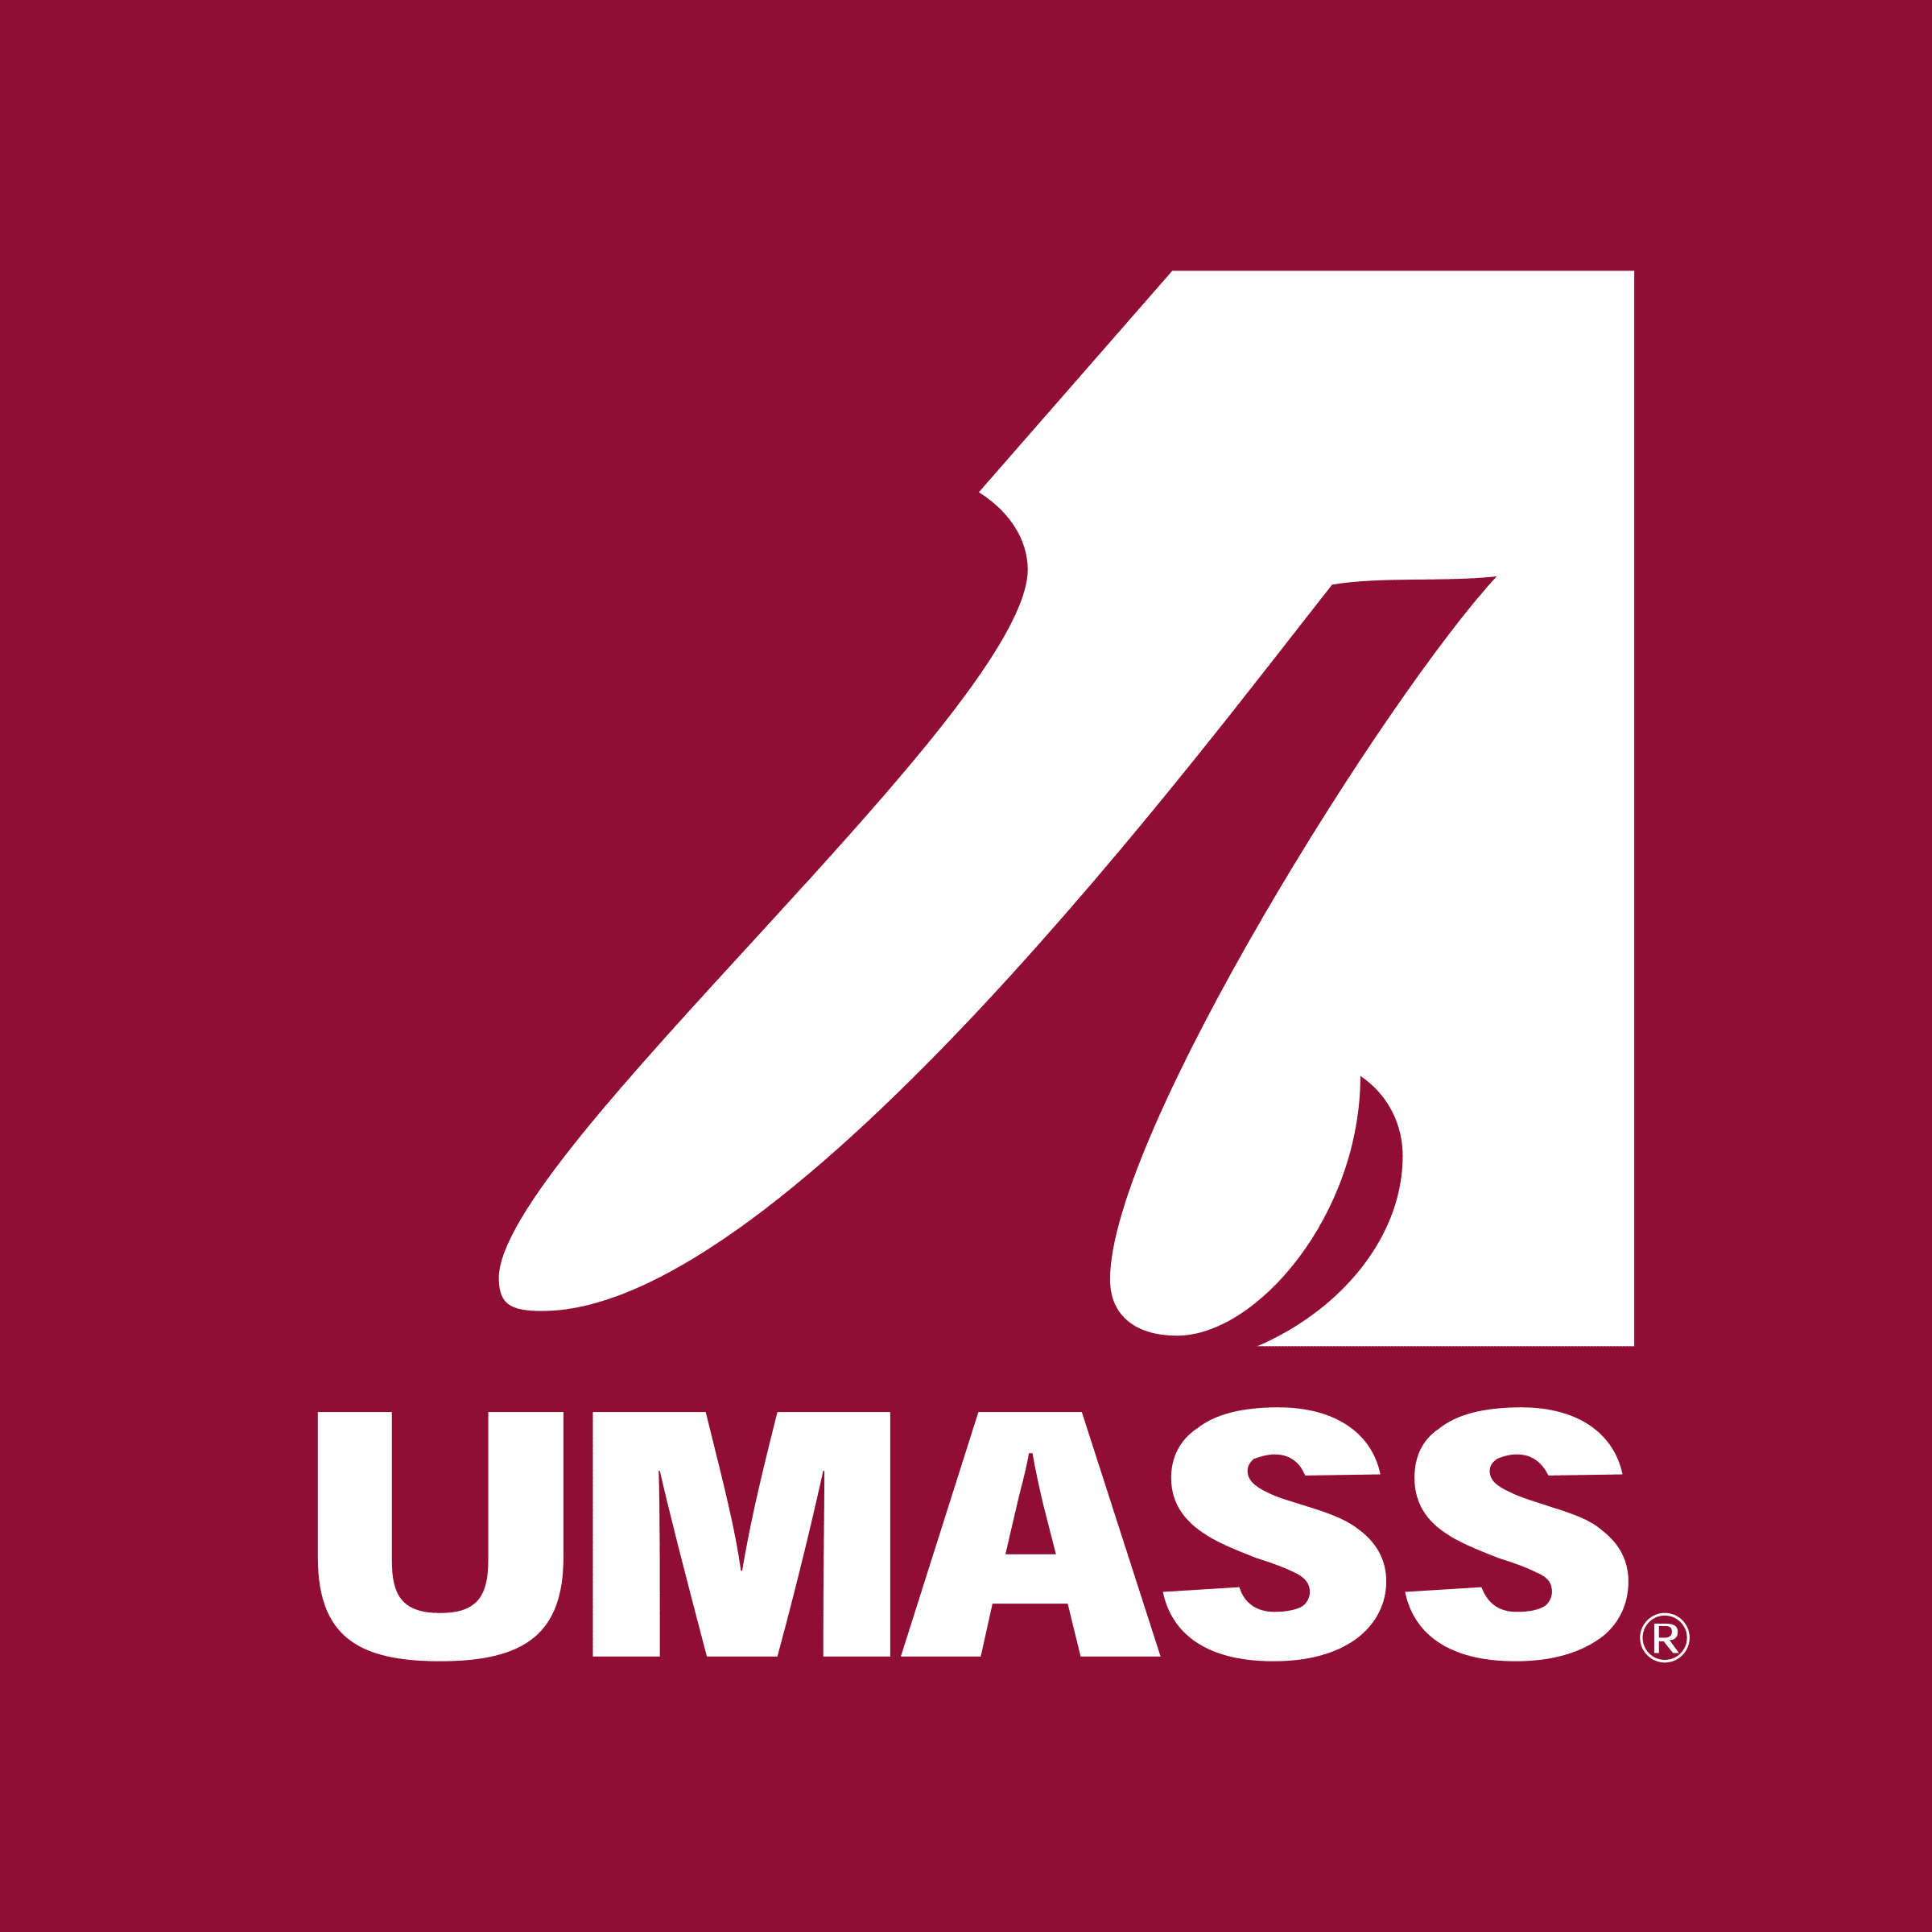 university of massachusetts